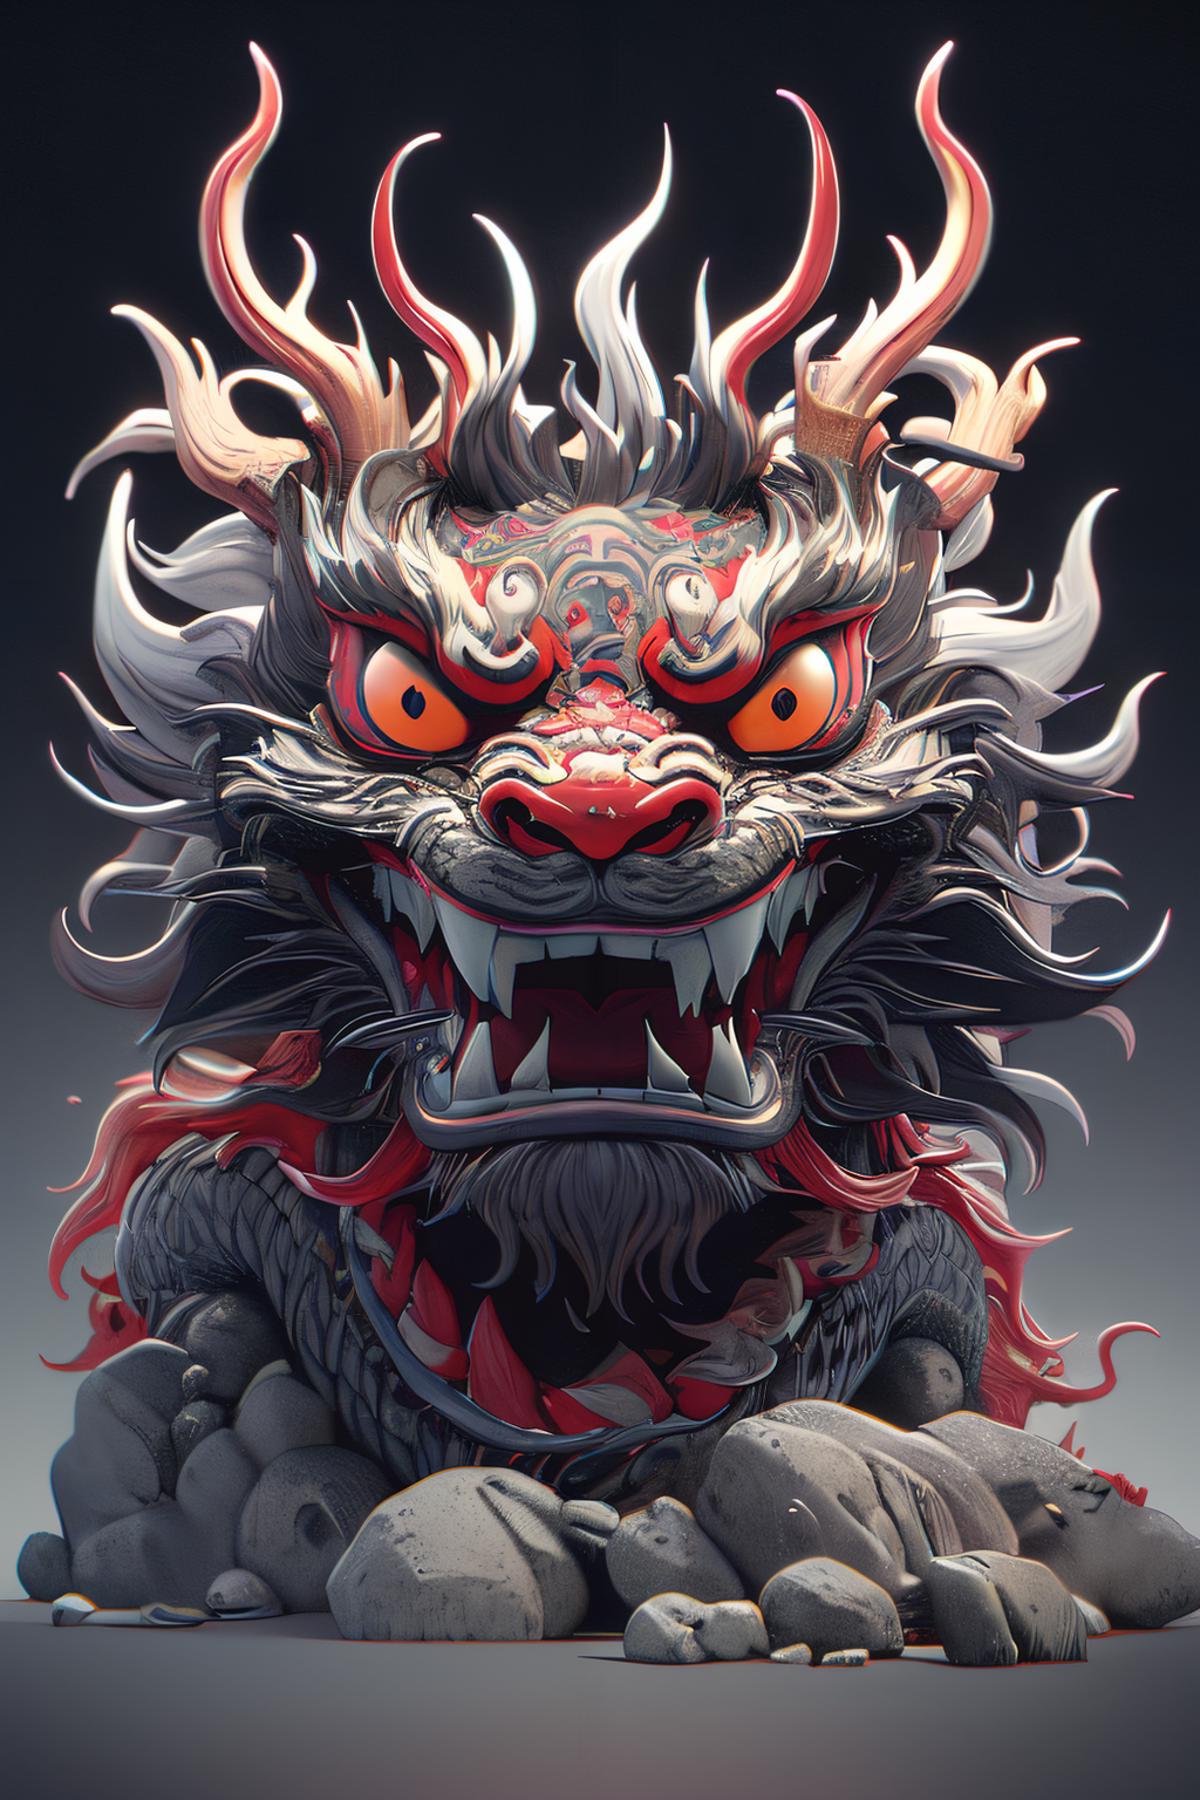 3D|Oriental Dragon image by Aesonne